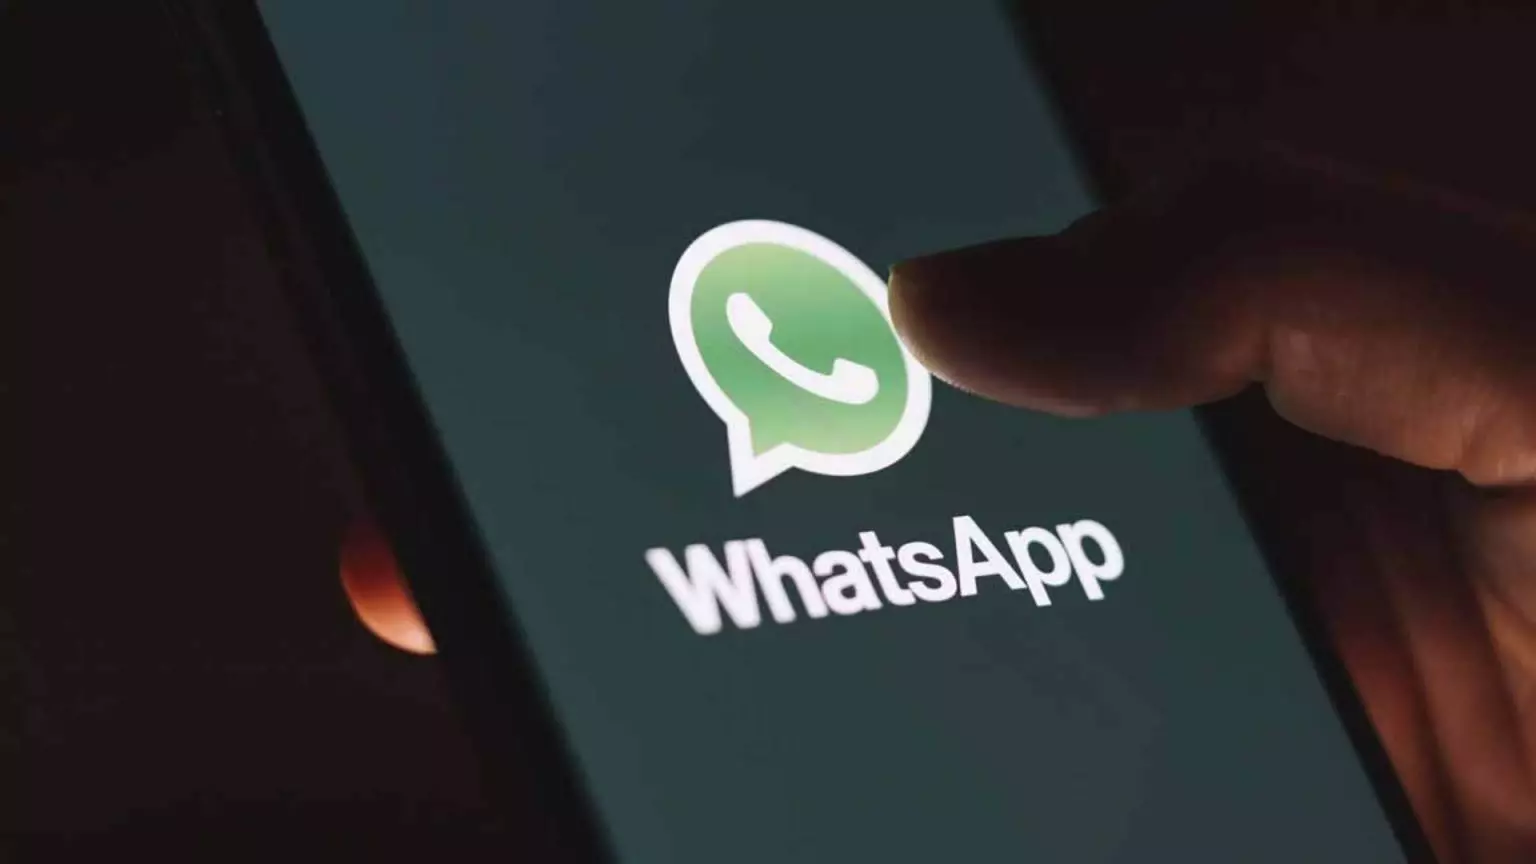 Novidade: WhatsApp começa a liberar aplicativo para tablets Android